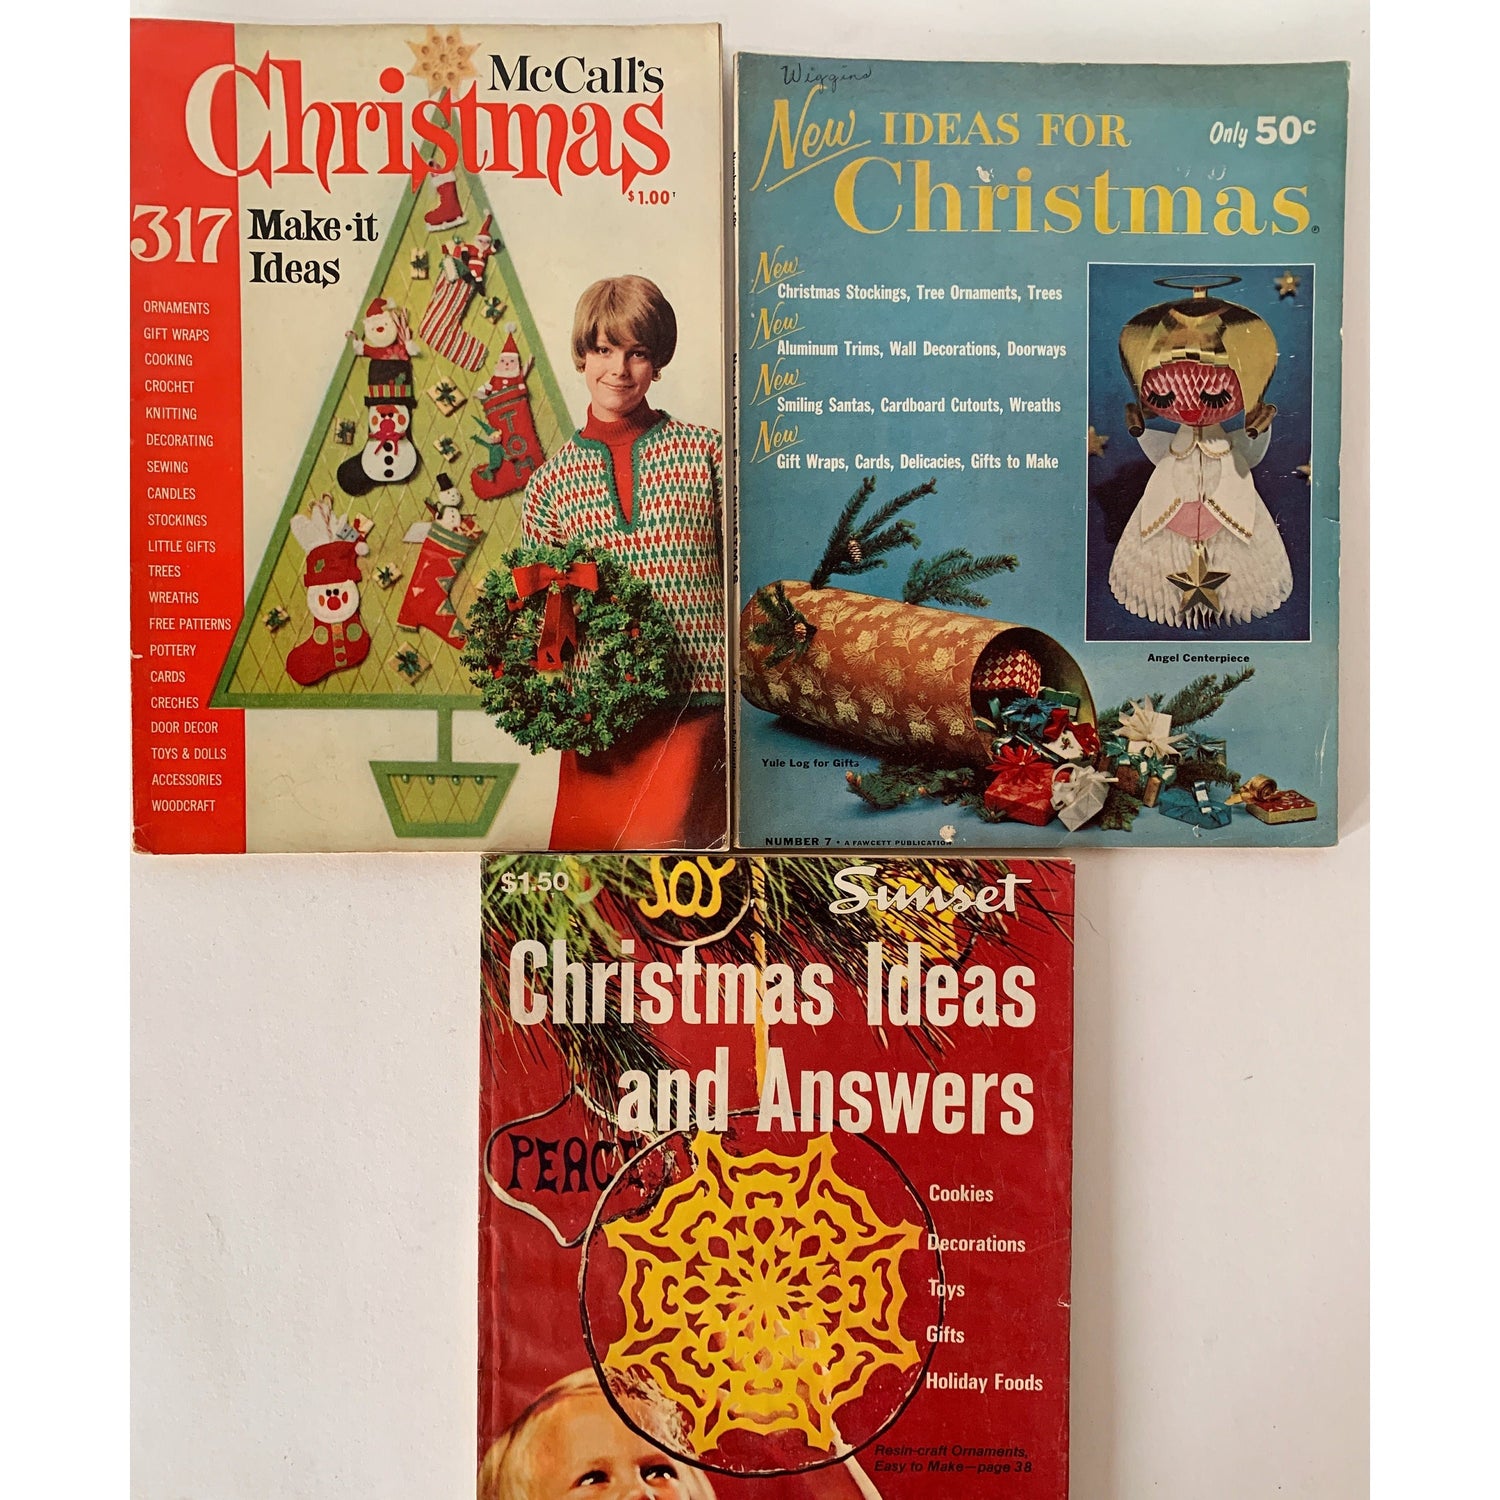 Set of 8 Holiday Edition Vintage Magazines, Mid Century Modern